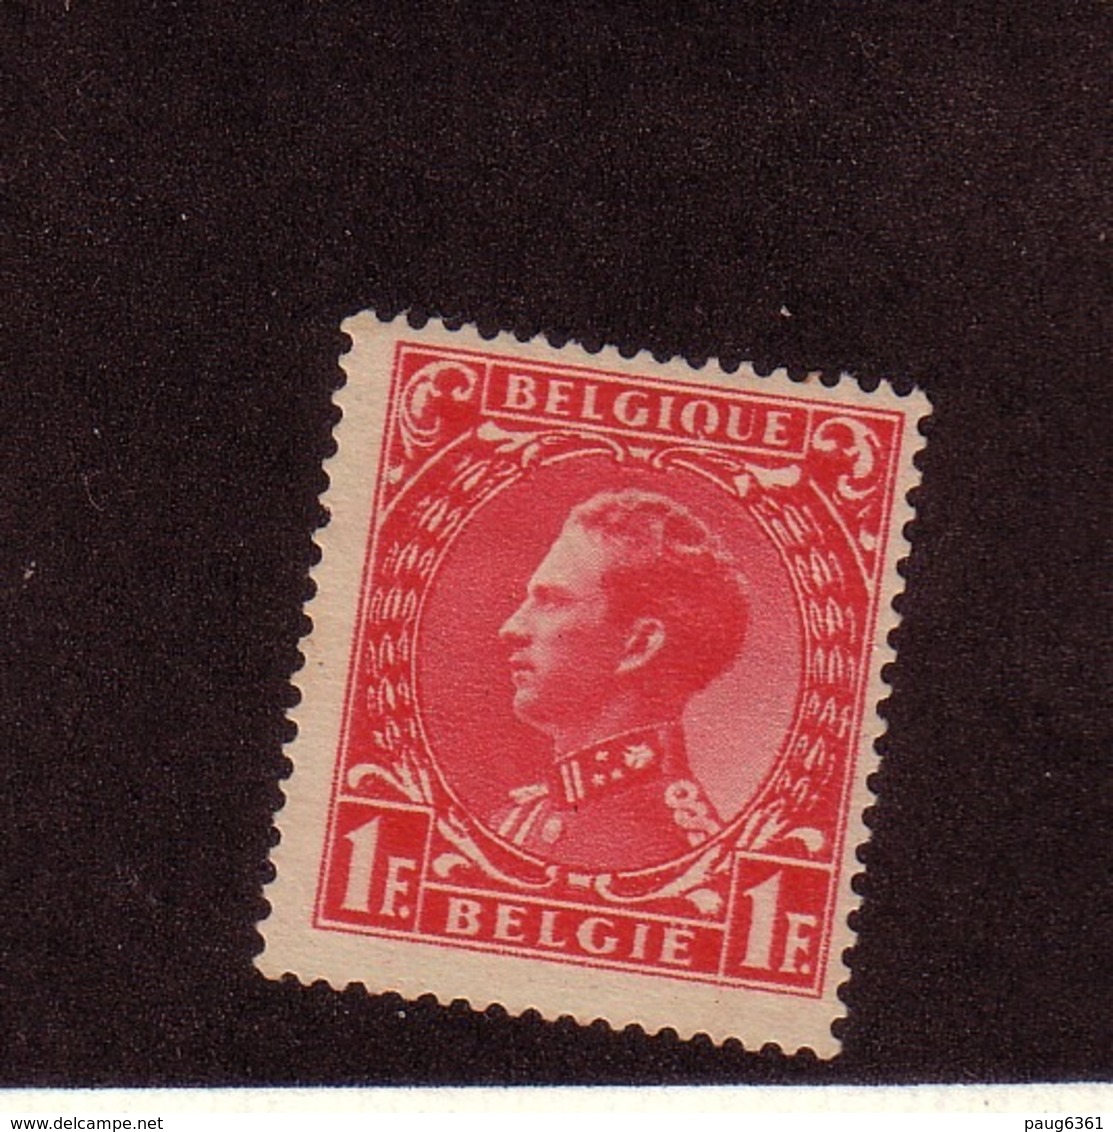 BELGIQUE 1934/35 LEOPOLD III   YVERT N°403  NEUF MH* - 1934-1935 Leopold III